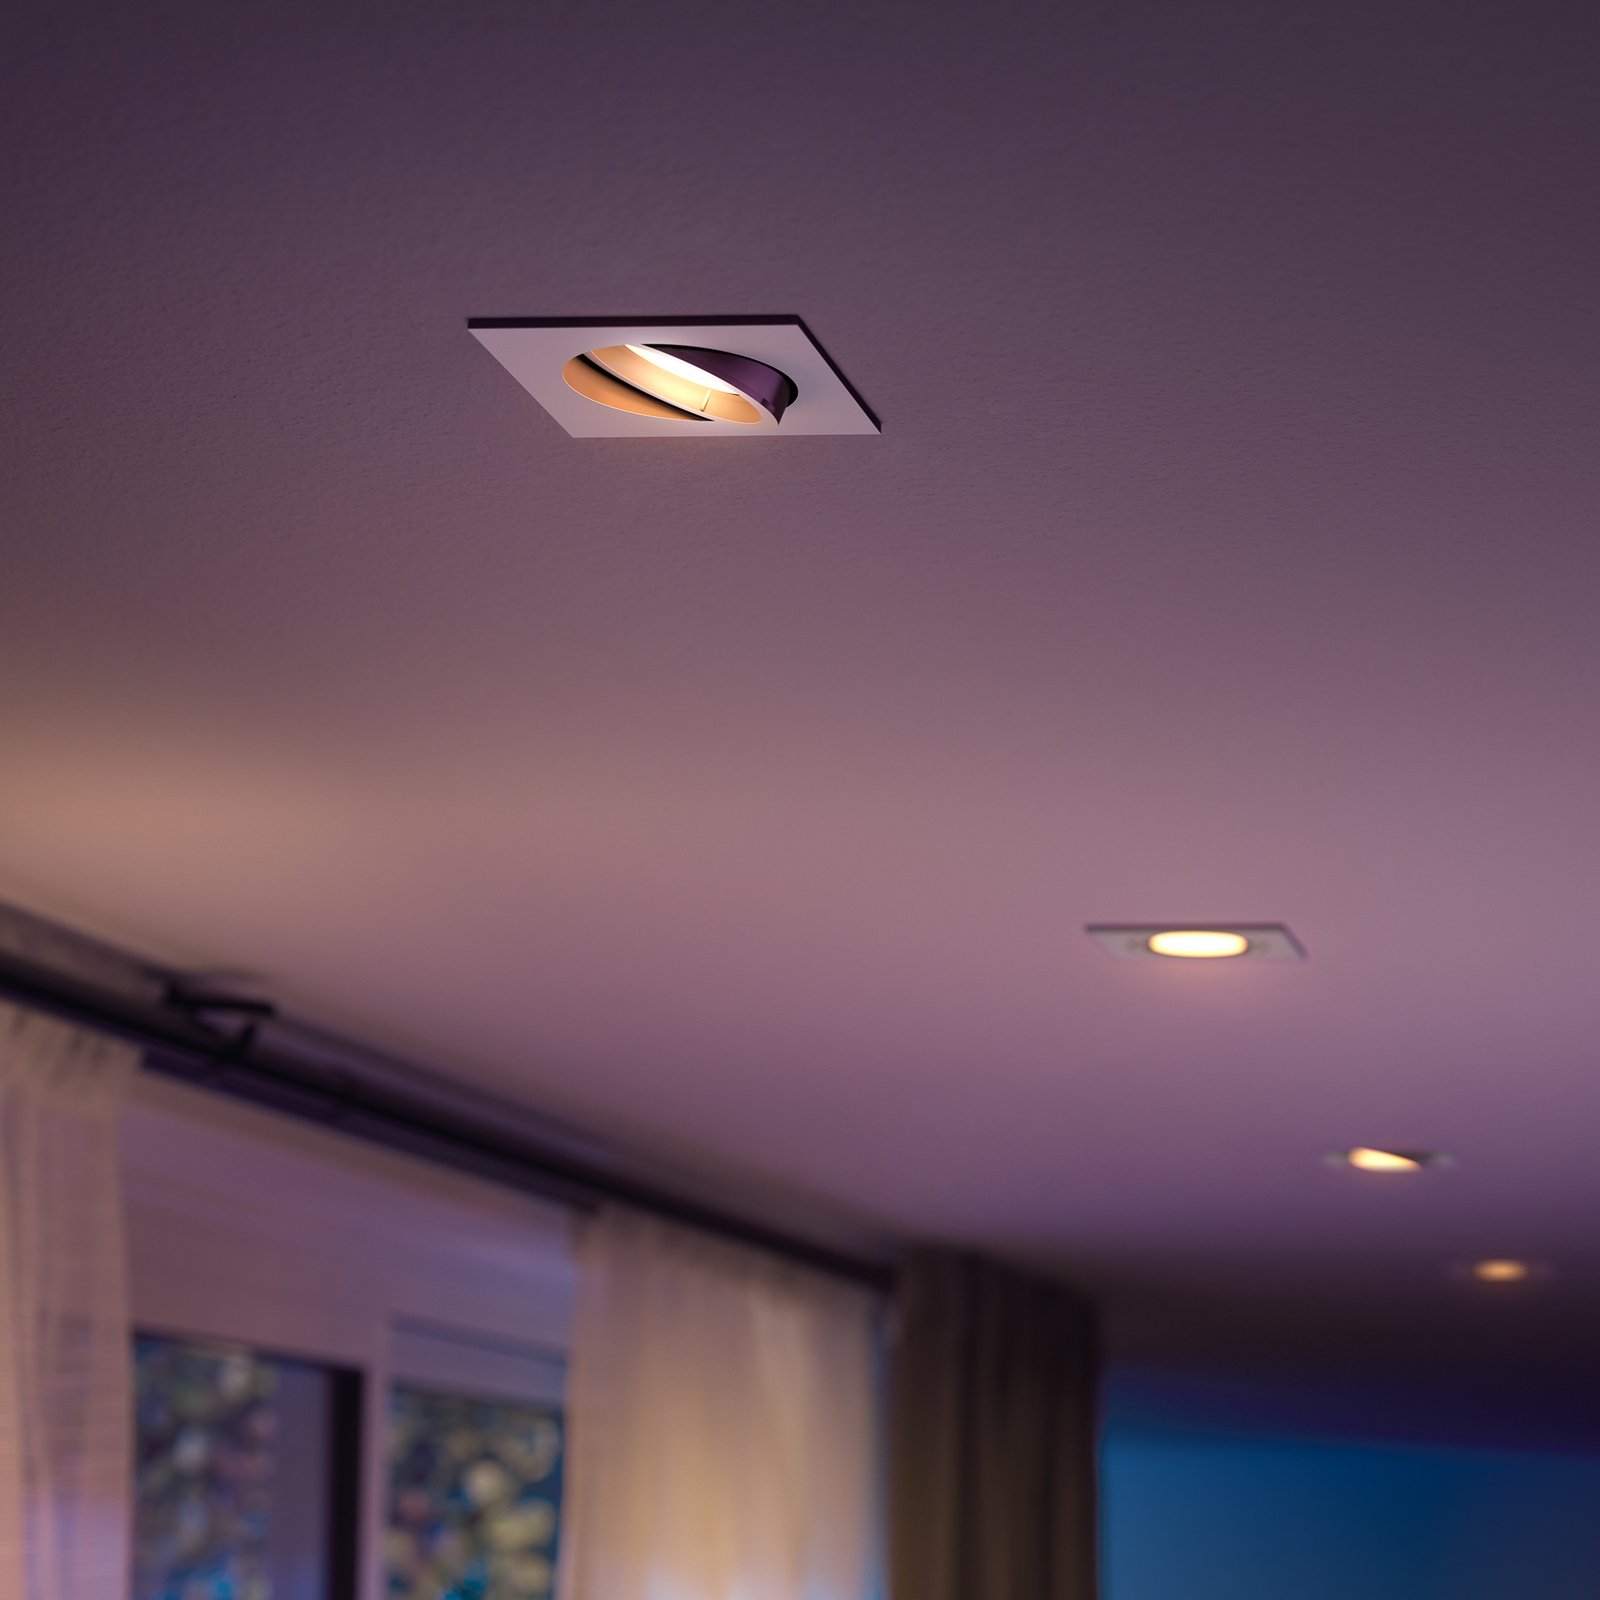 Philips Hue Centura LED projetor de embutir, angular, branco